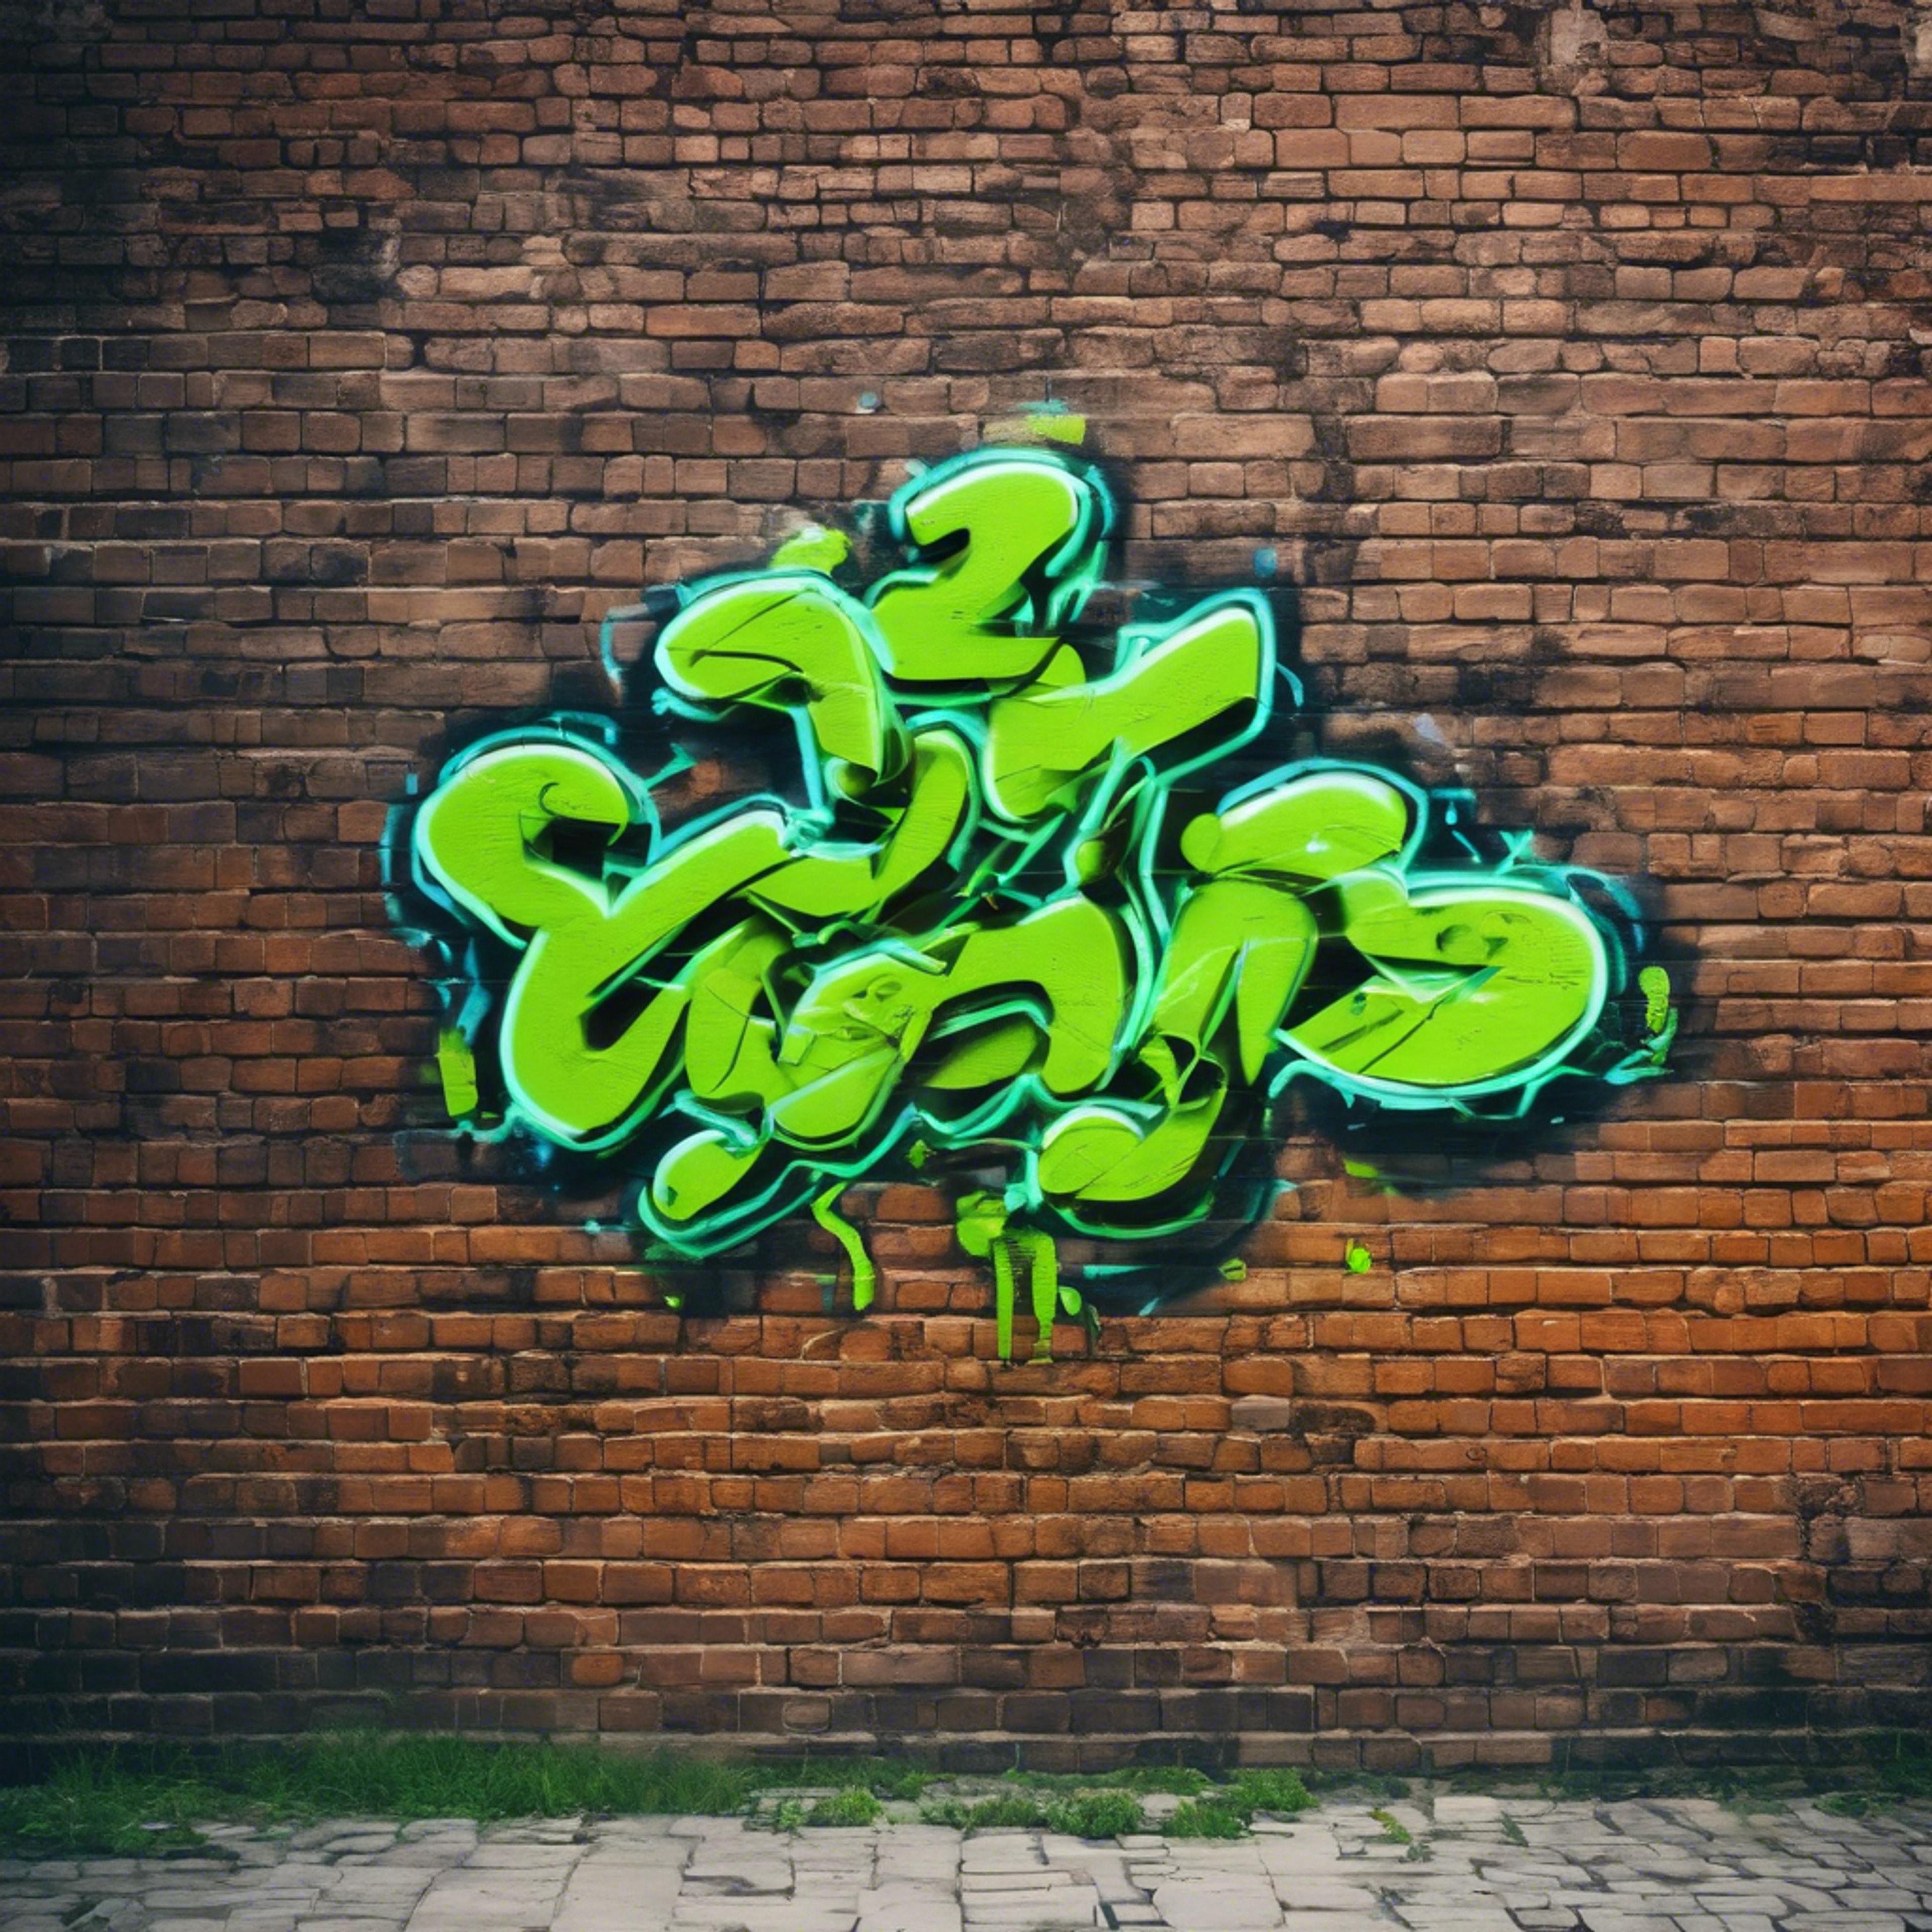 Cool neon green graffiti on an old brick wall in an urban setting. duvar kağıdı[8032604dbabf4a1691c6]